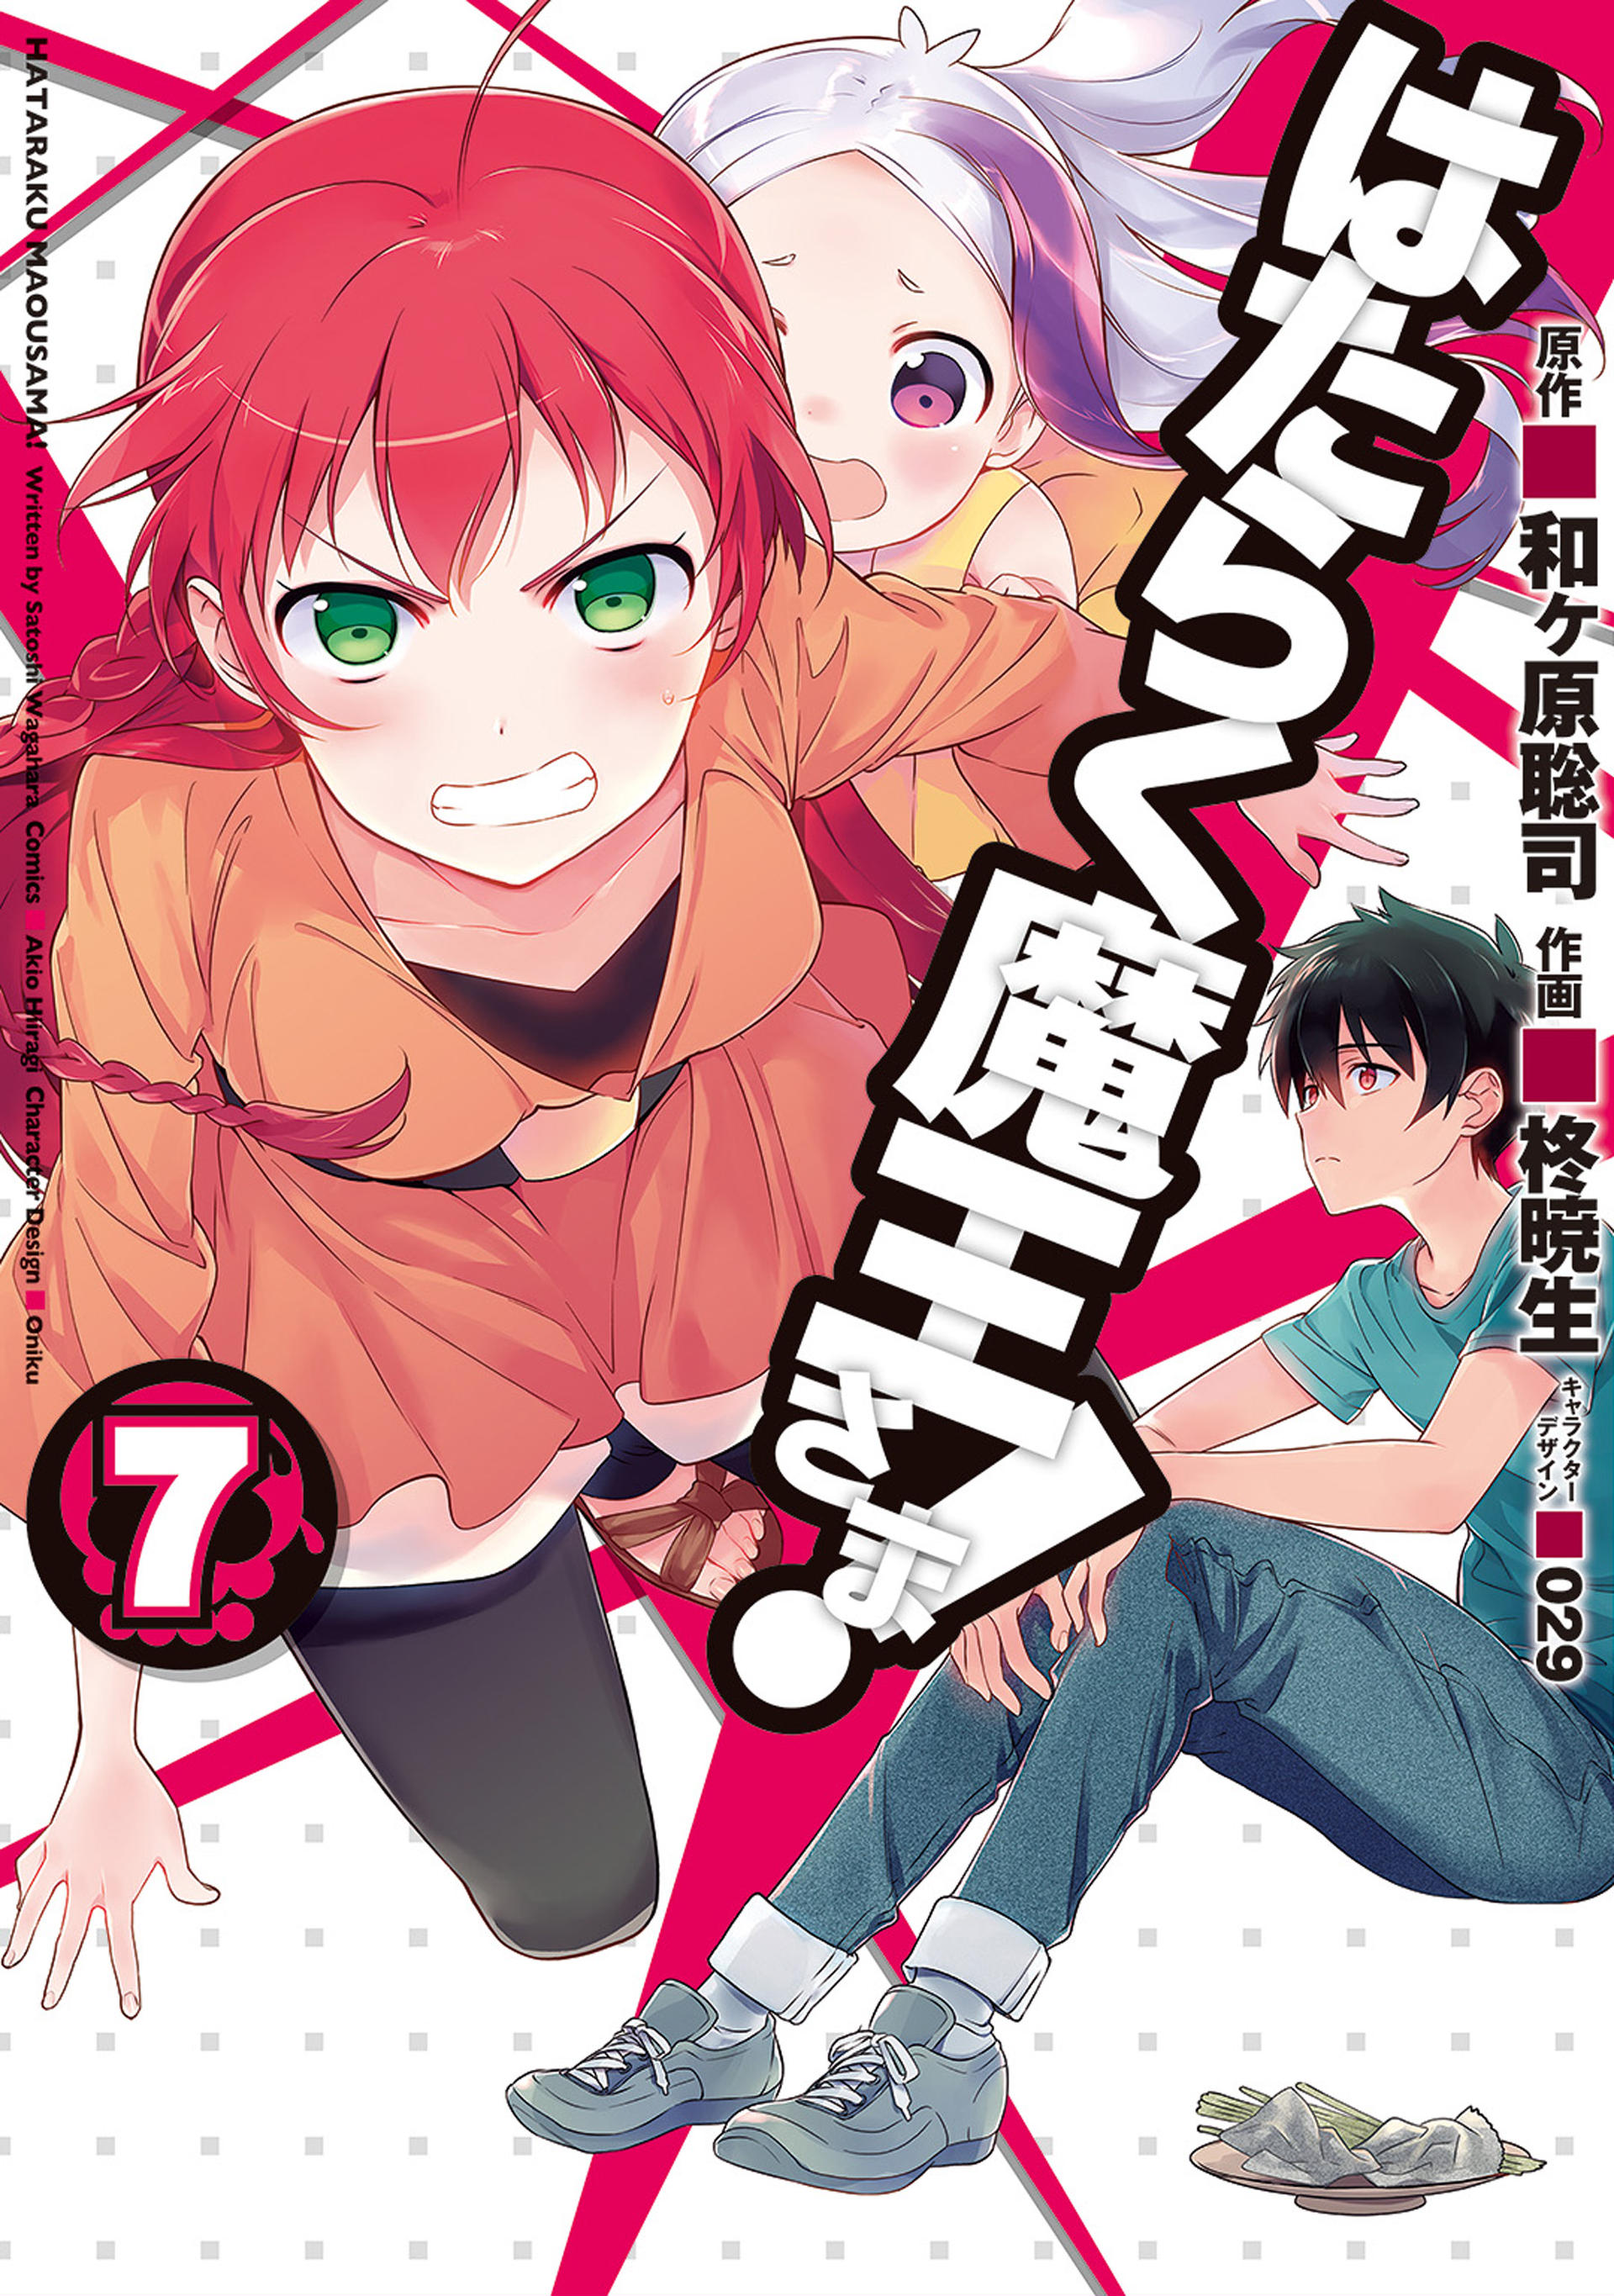 Manga Mogura RE on X: The Devil is a Part-Timer manga adaptation Vol.22  by Wagahara Satoshi, Hiragi Akio, Oniku English release @yenpress (Hataraku  Maou-sama!)  / X